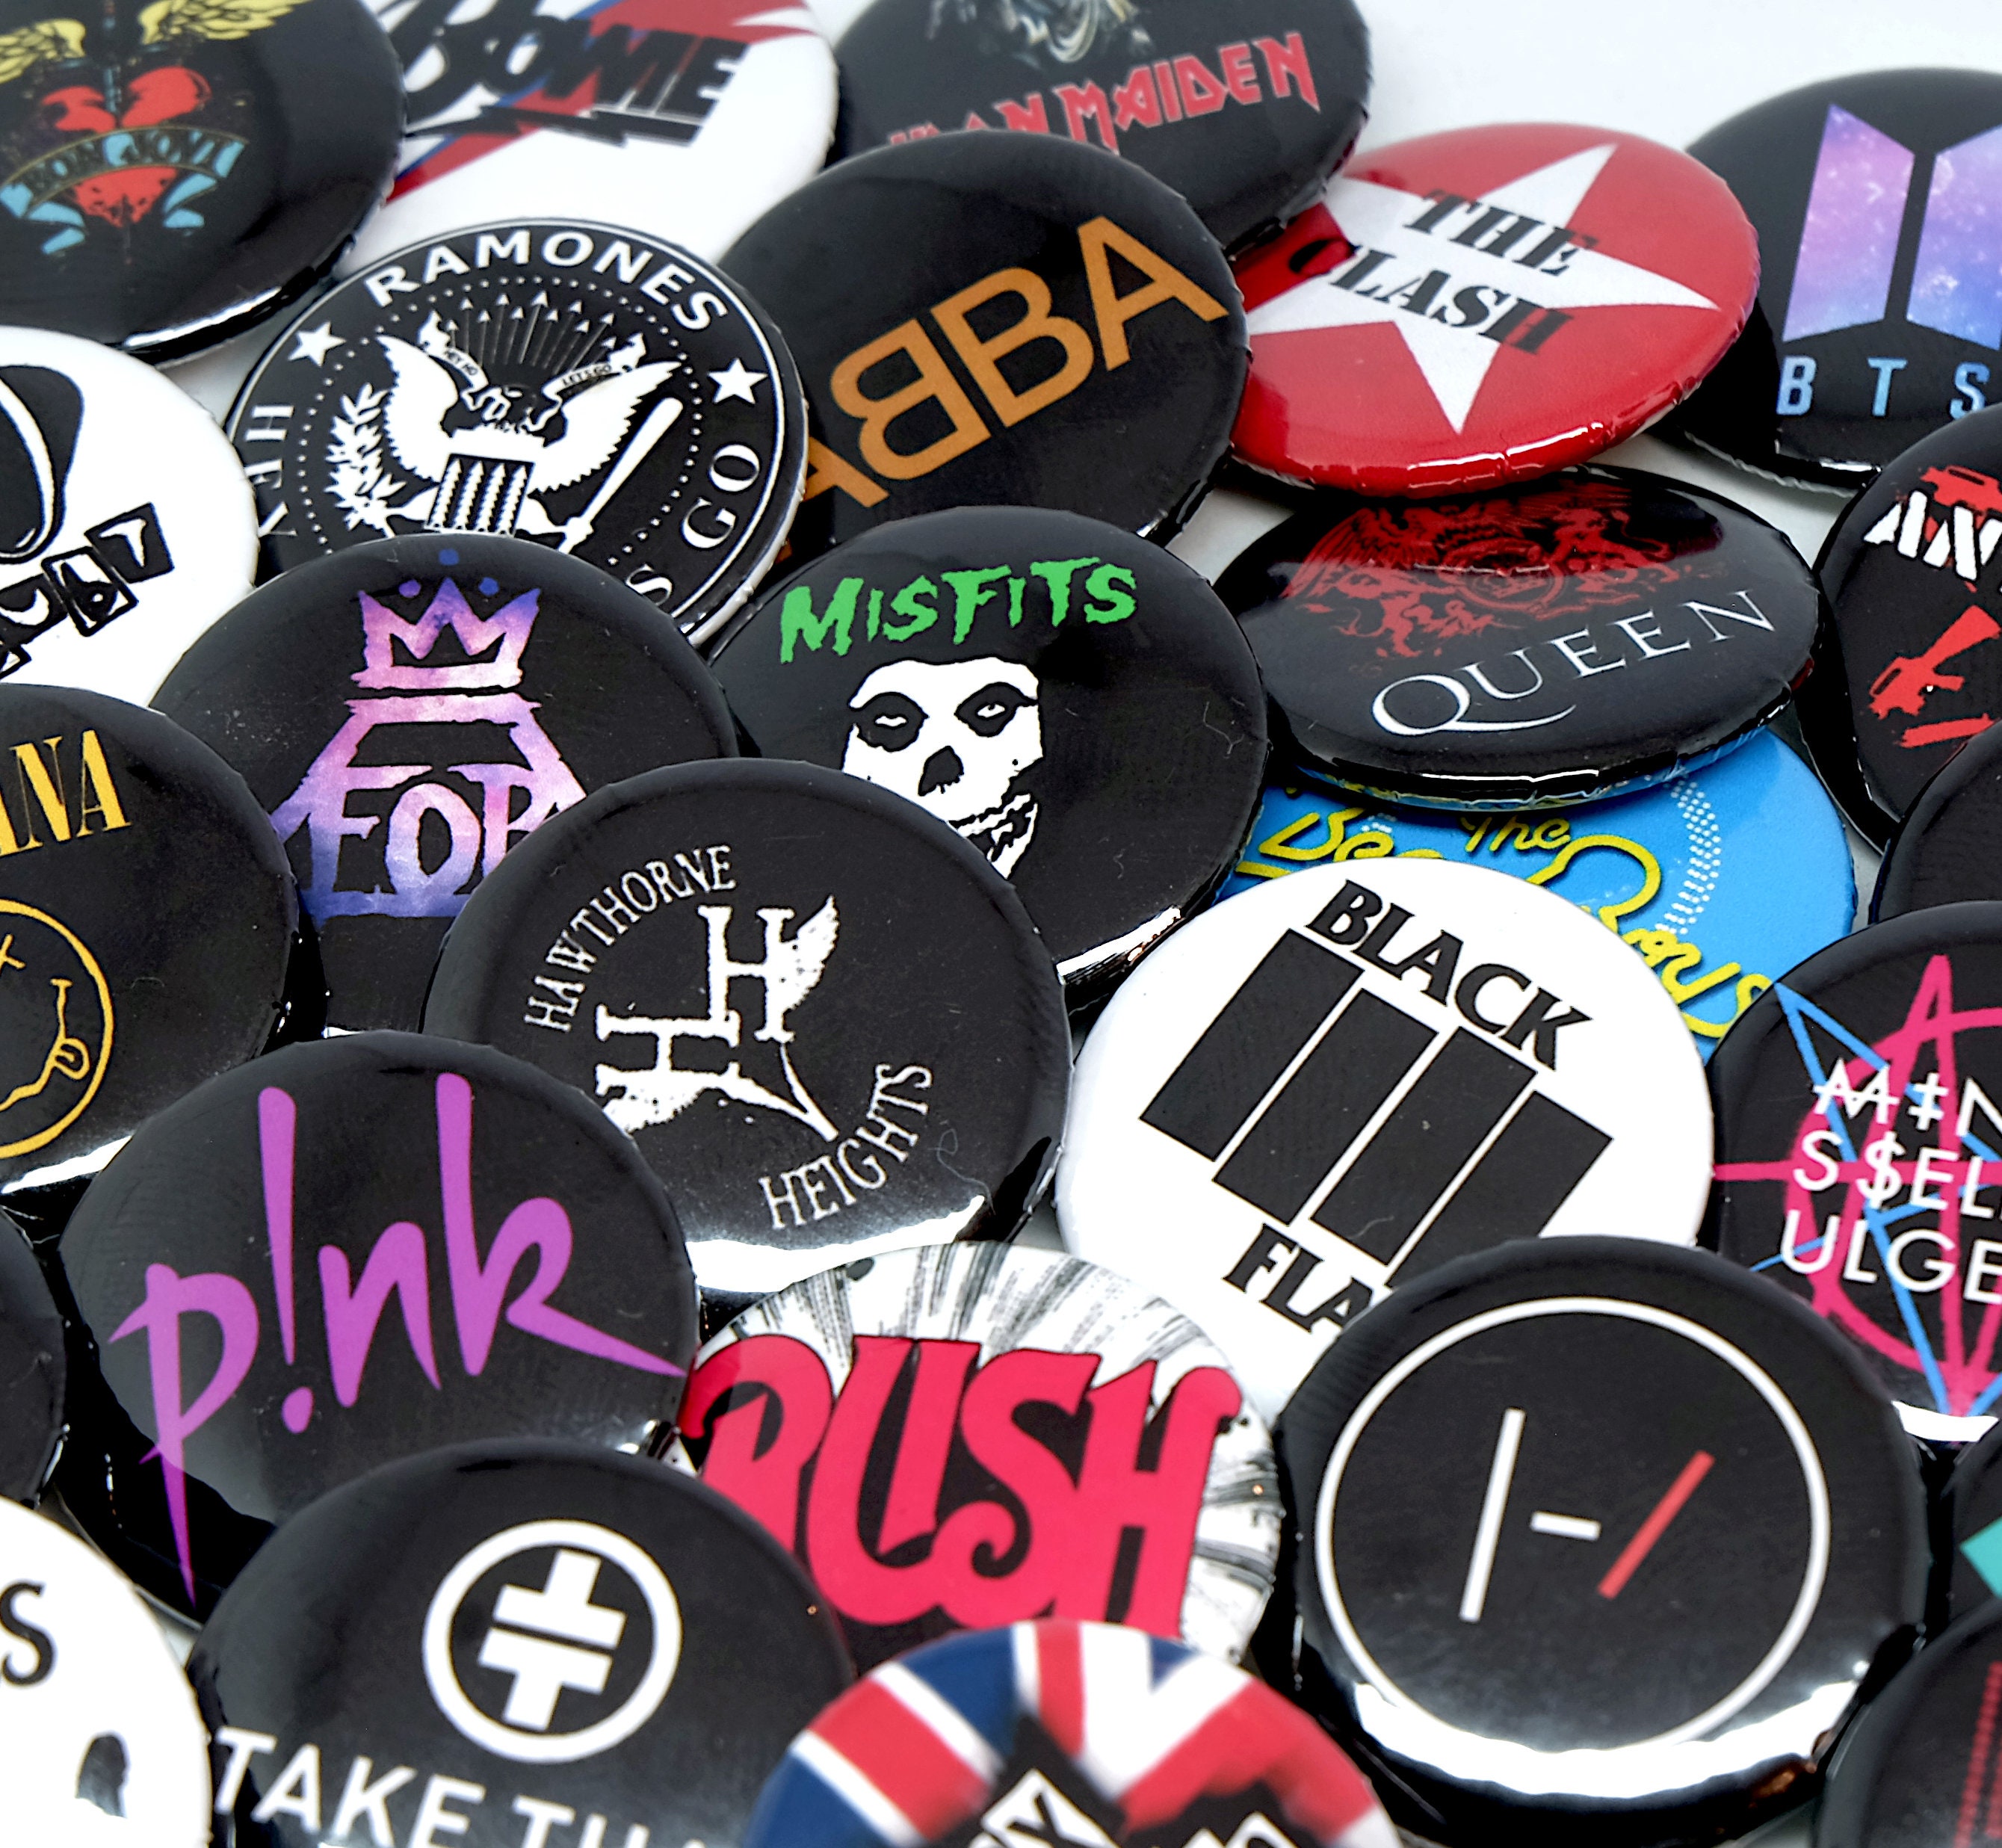 BAND LOGO Pins Rock Punk Metal Pop Music Pins Any Band Choose Your Own  Custom Band Pin Music Badges Band Buttons 25mm Badge 